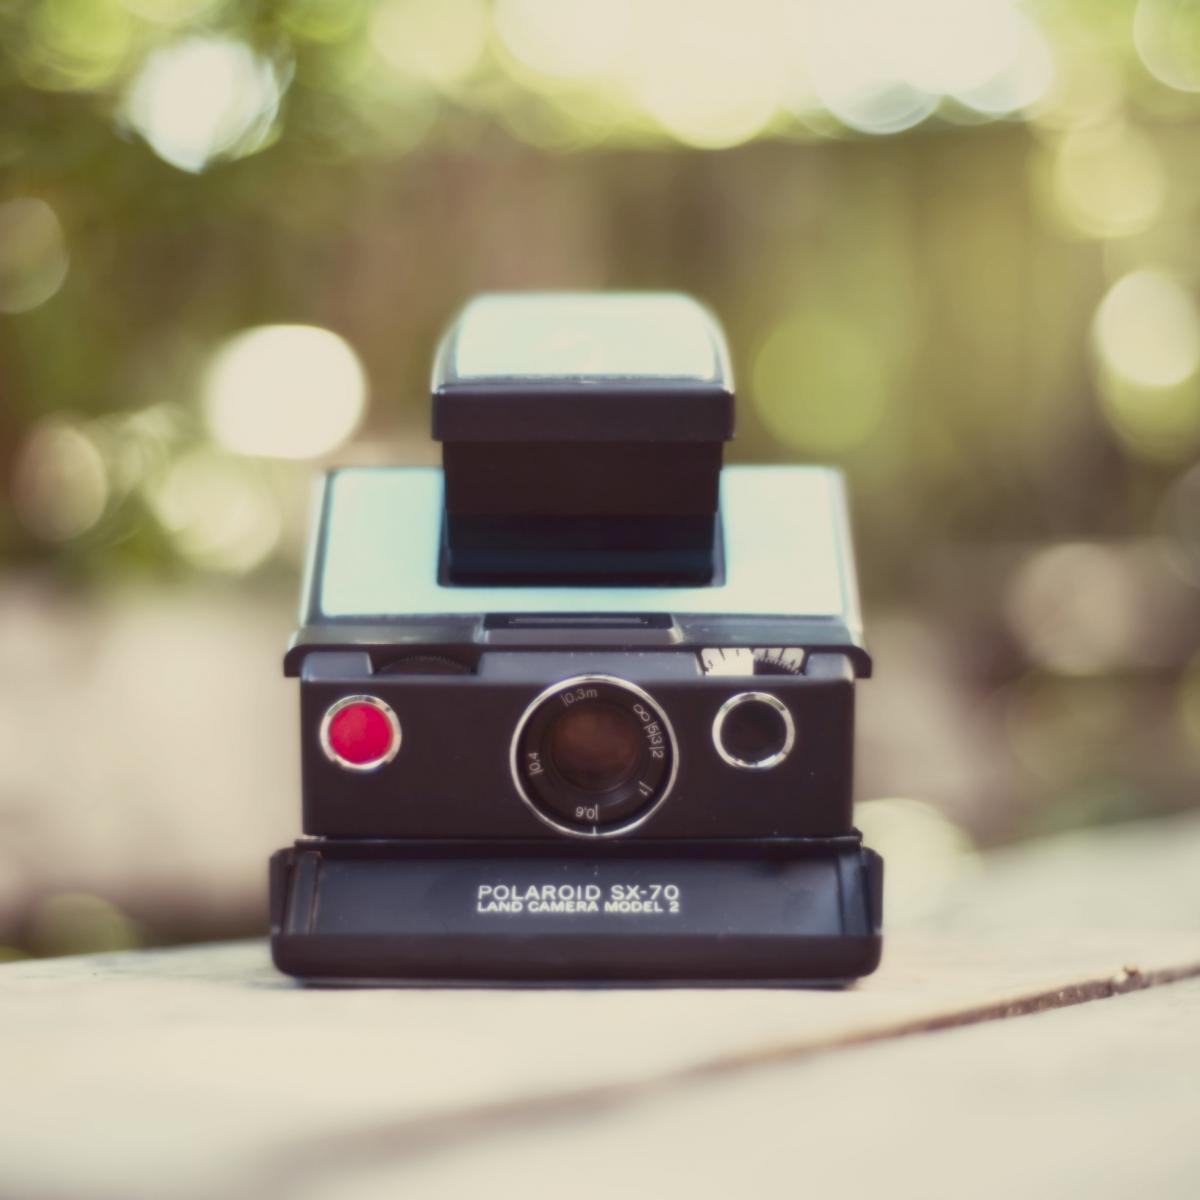 Polaroid-энтузиасты: 365 дней в объективе Polaroid фотографа Jolanda Boekhout